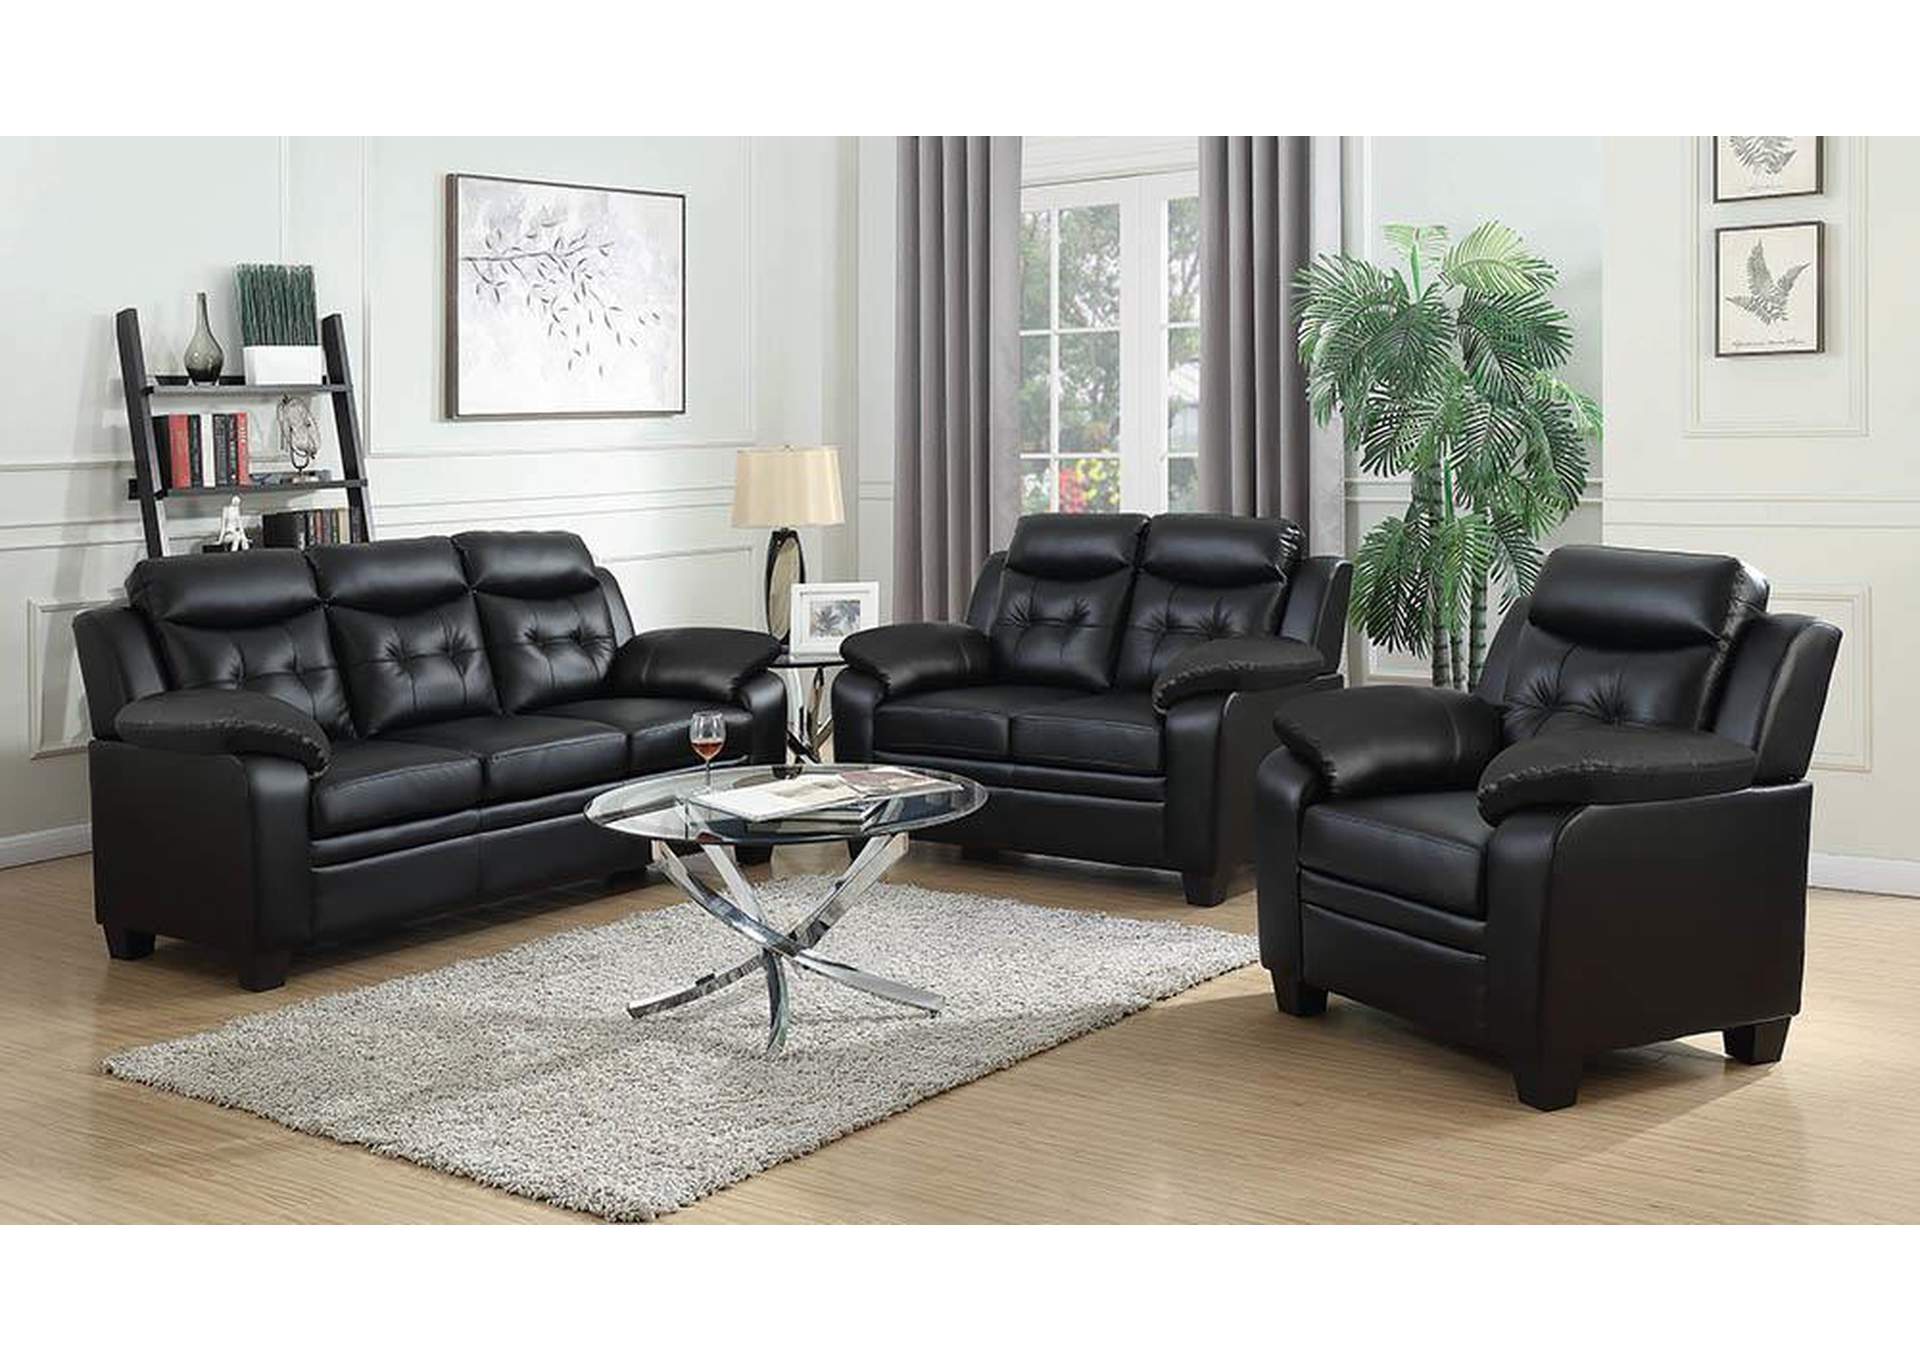 La Bro S Home Furnishings Livermore Ca Finley Black Padded Sofa